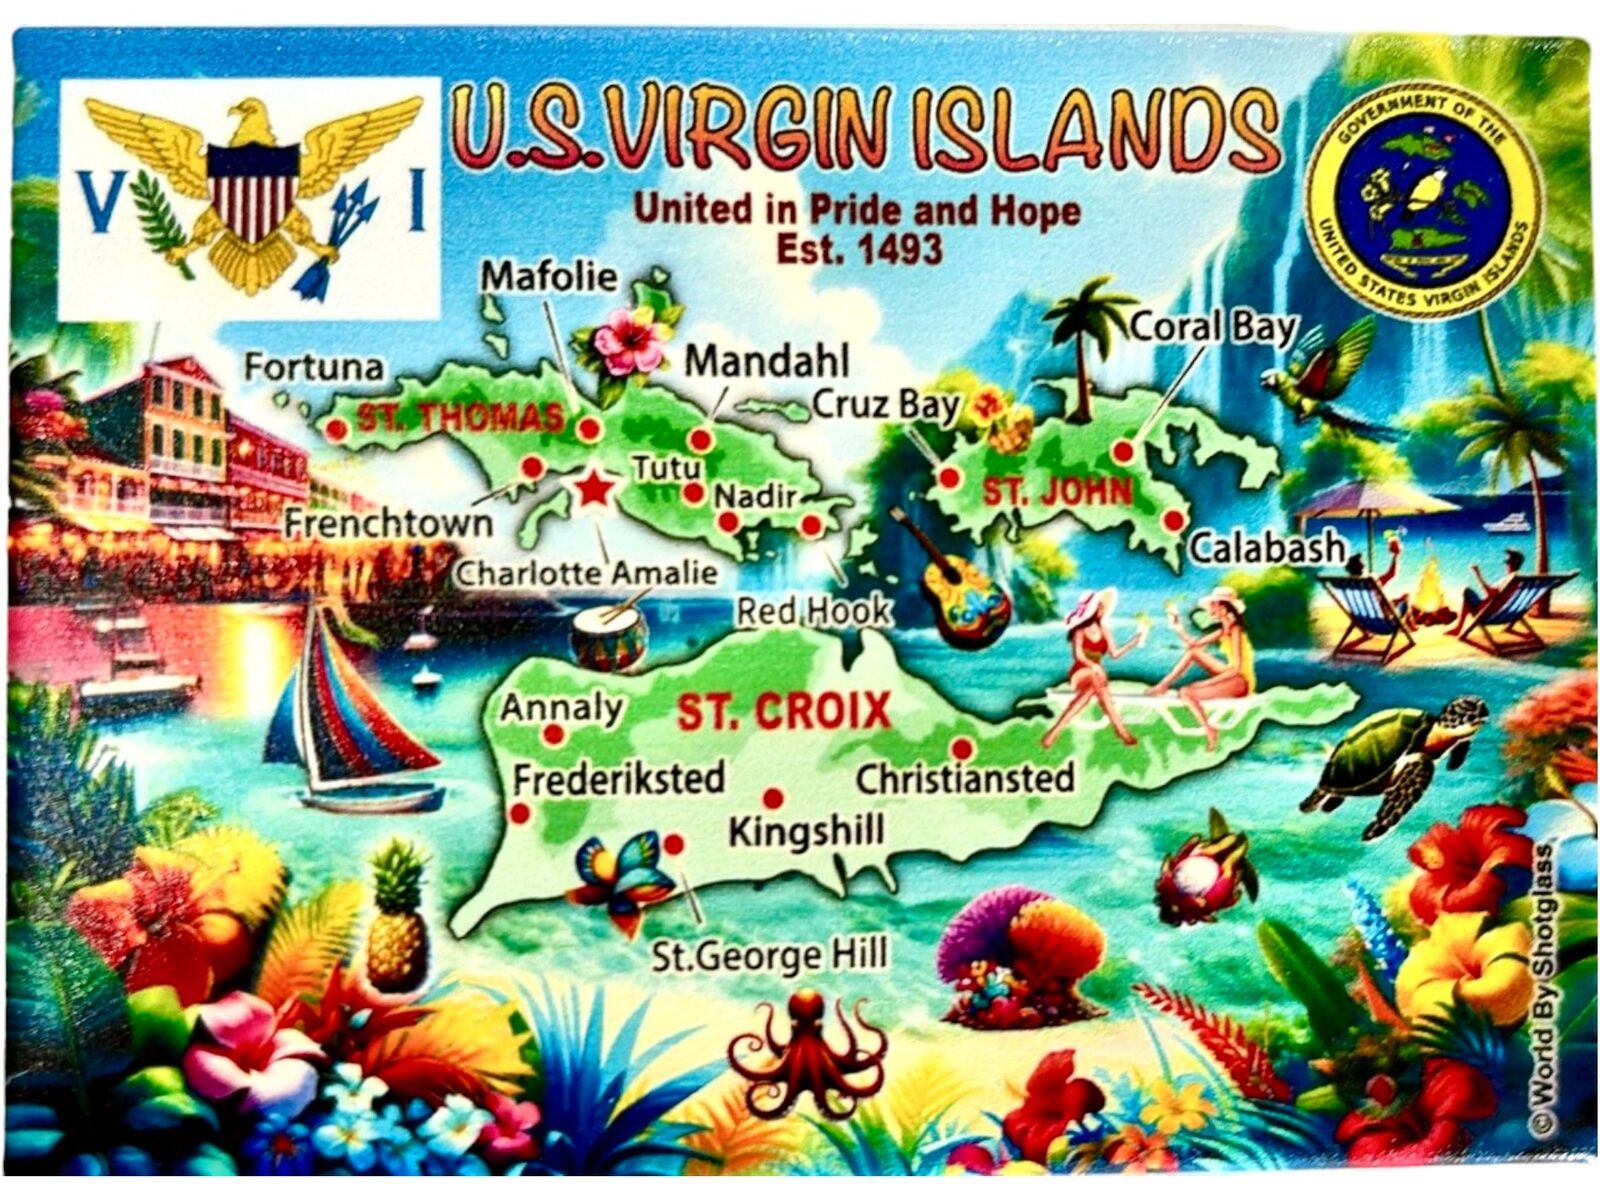 US Virgin Islands Graphic Map and Attractions Souvenir Fridge Magnet 2.5